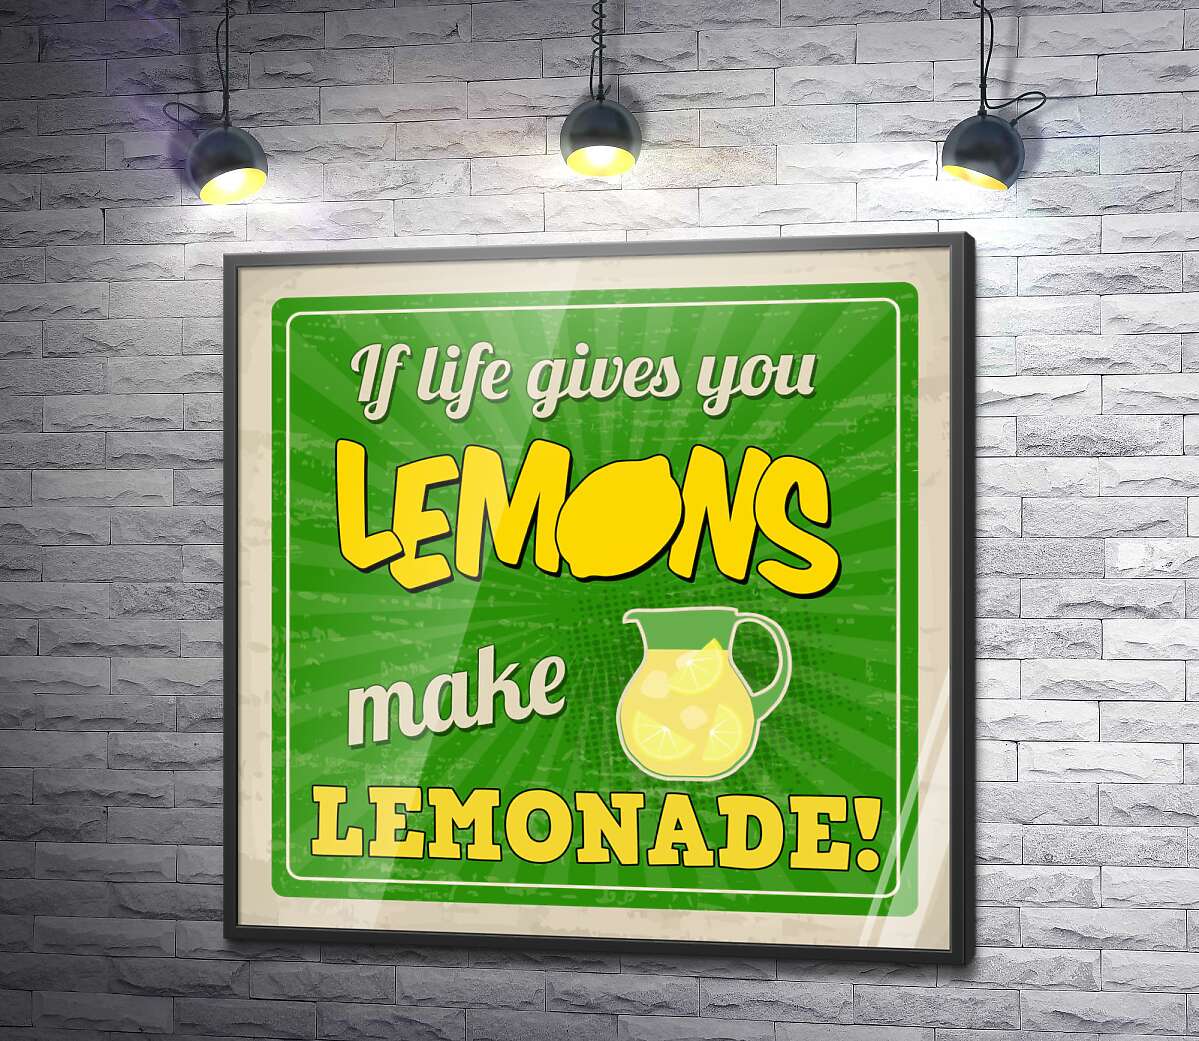 постер Мотиваційний напис: "If life gives you lemons make lemonade!"